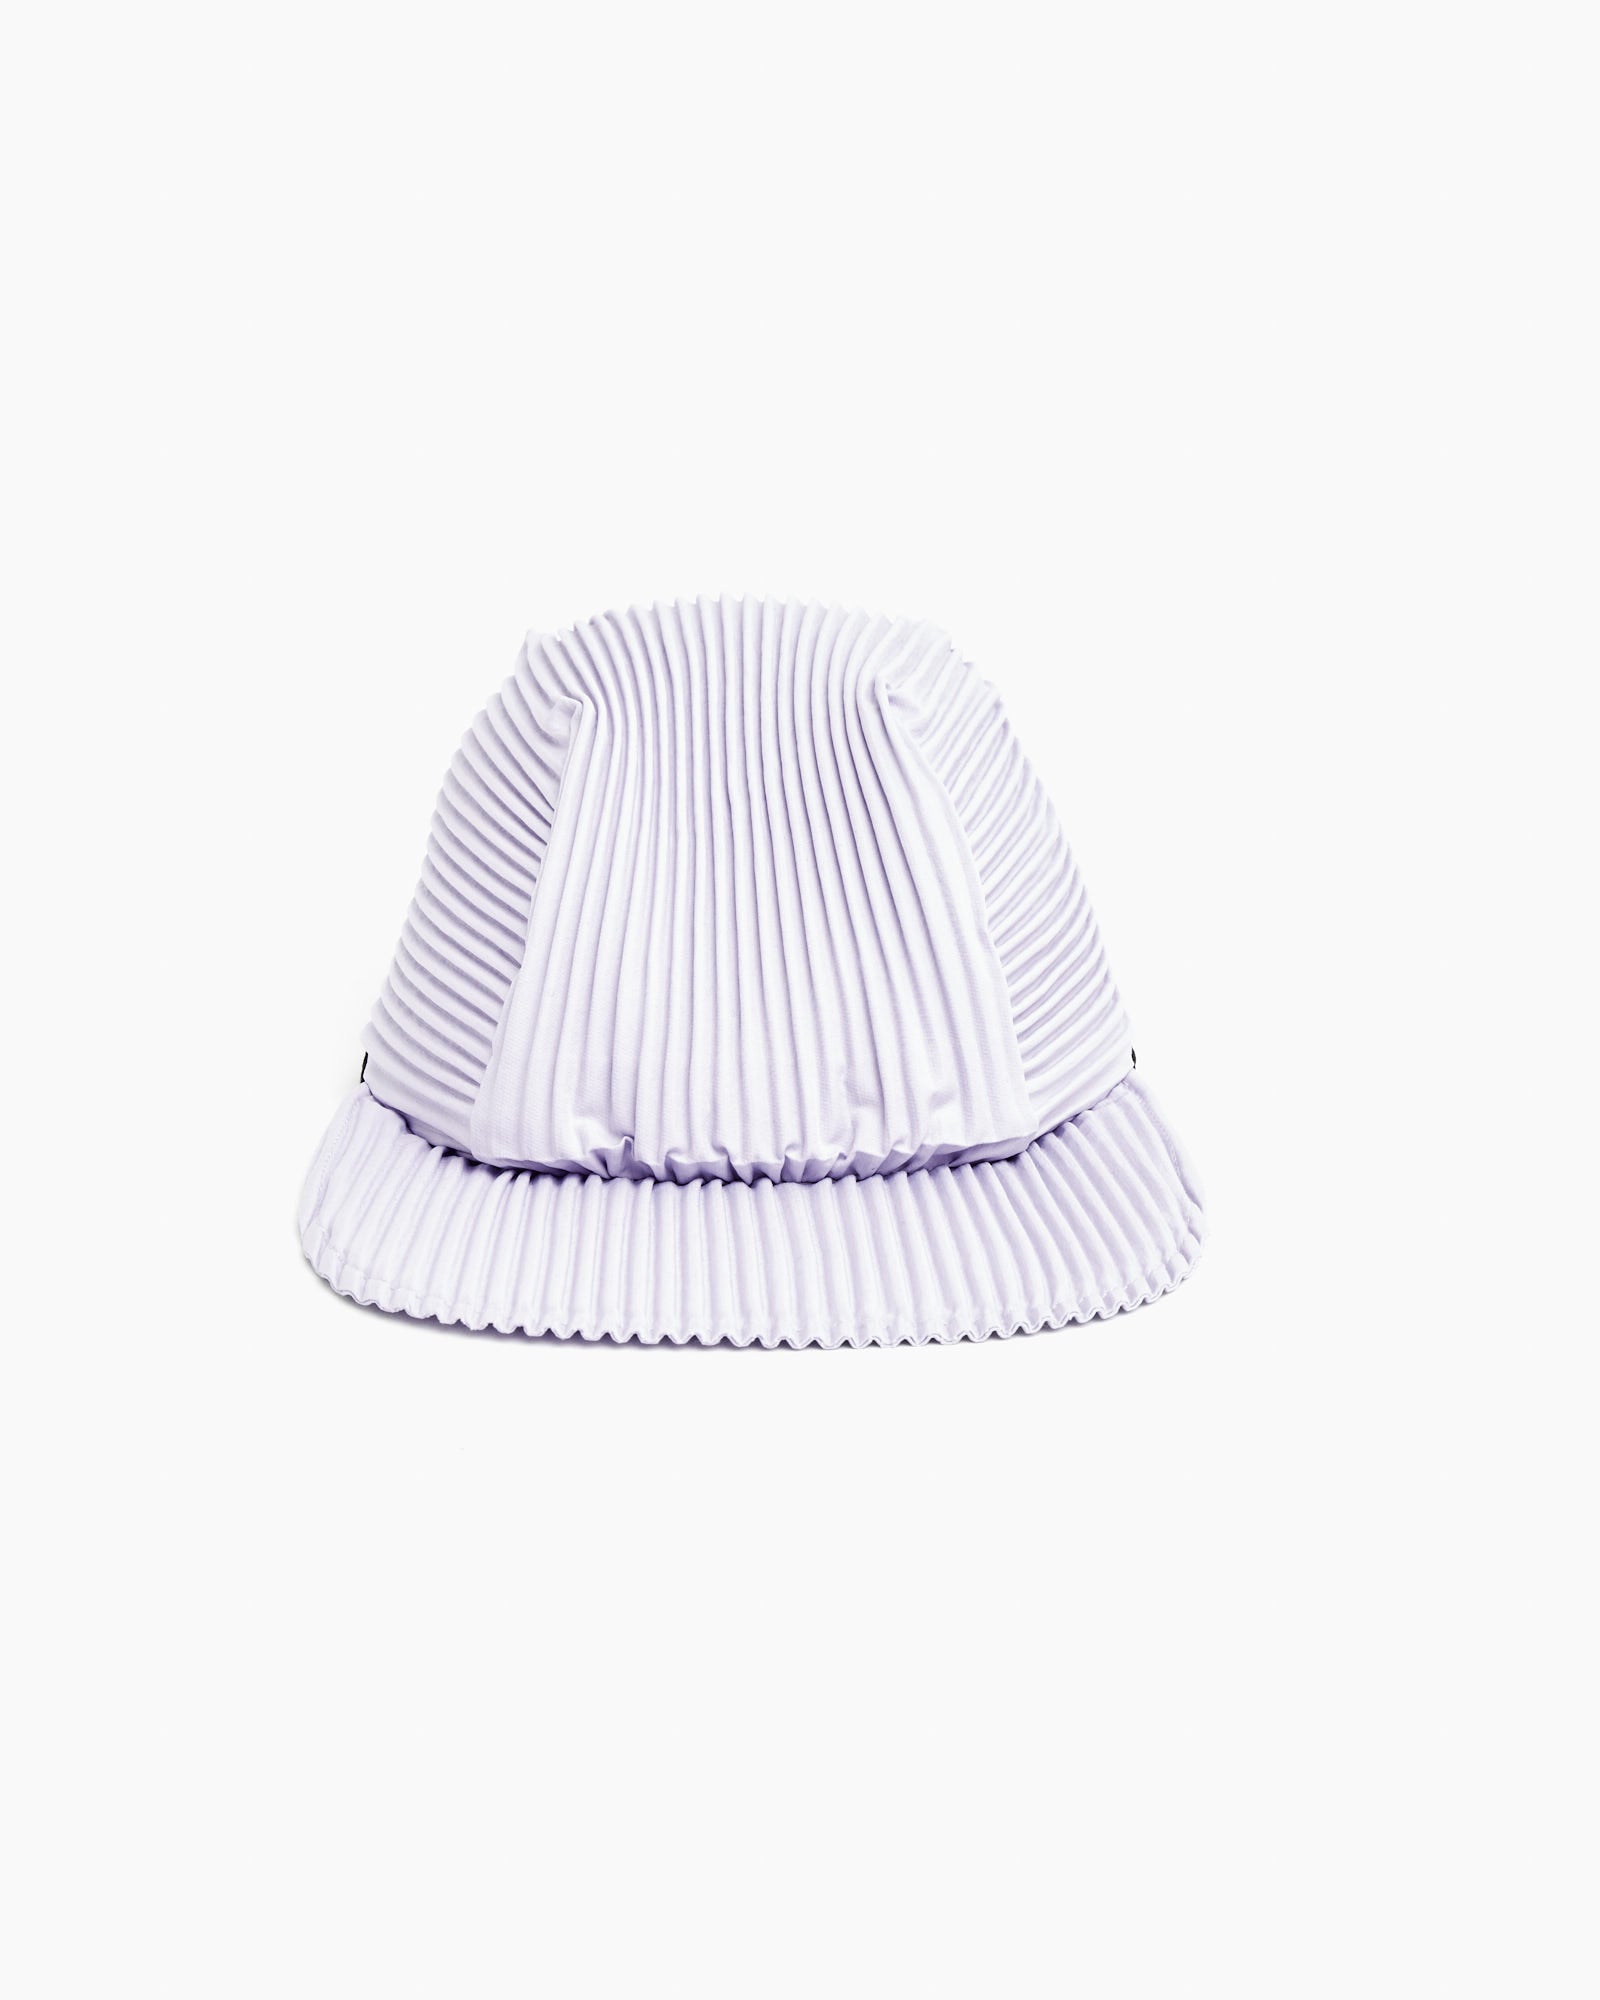 Pleats Cap in Soft Lavender